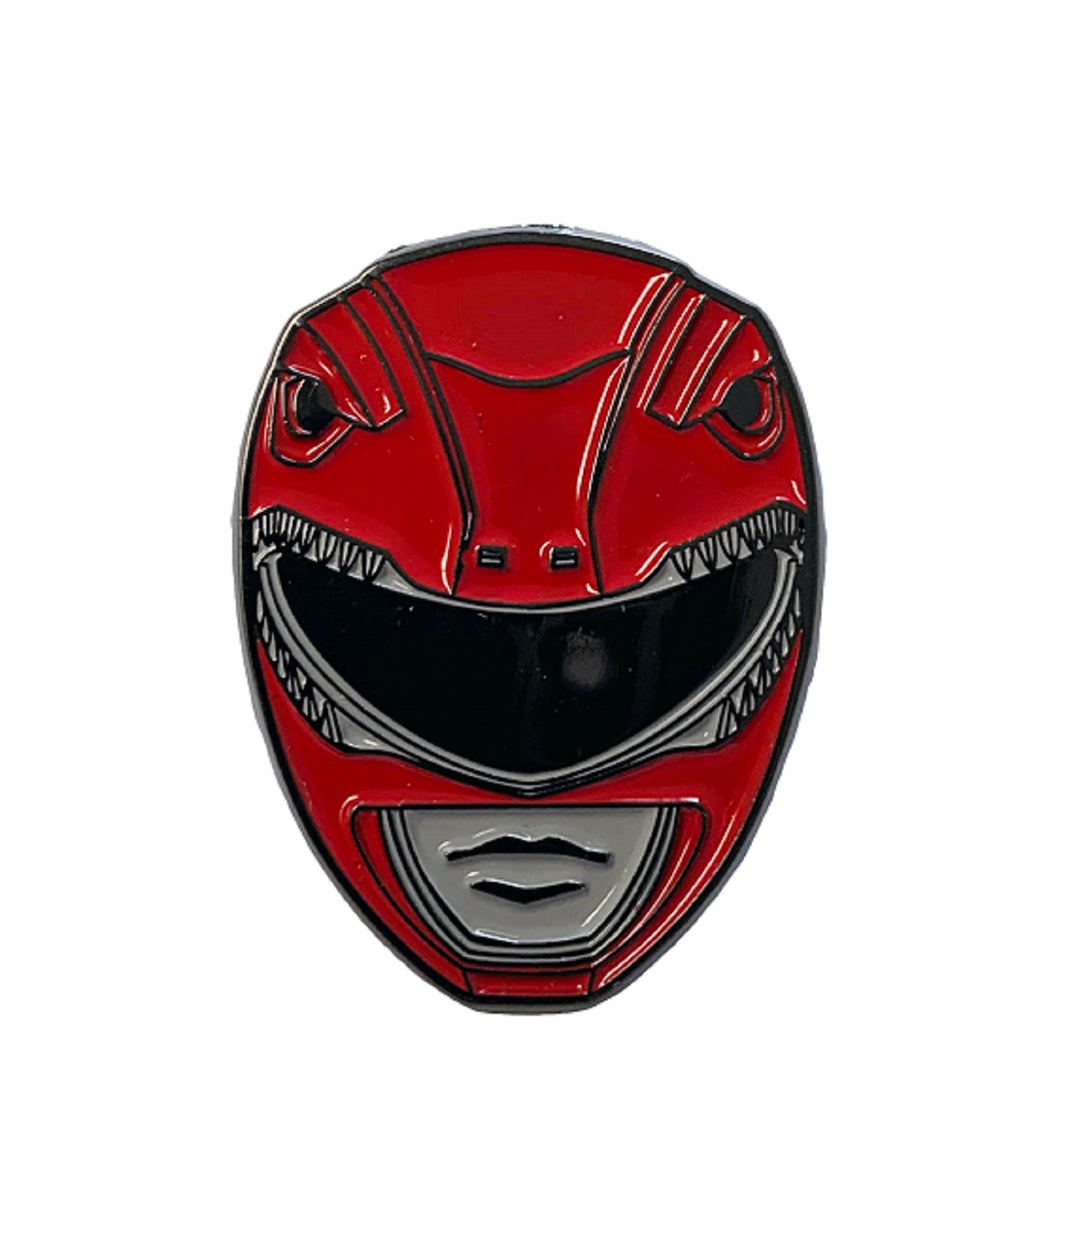 Power Rangers Red Ranger Mask and Emblem 2 Pack Enamel Pin set